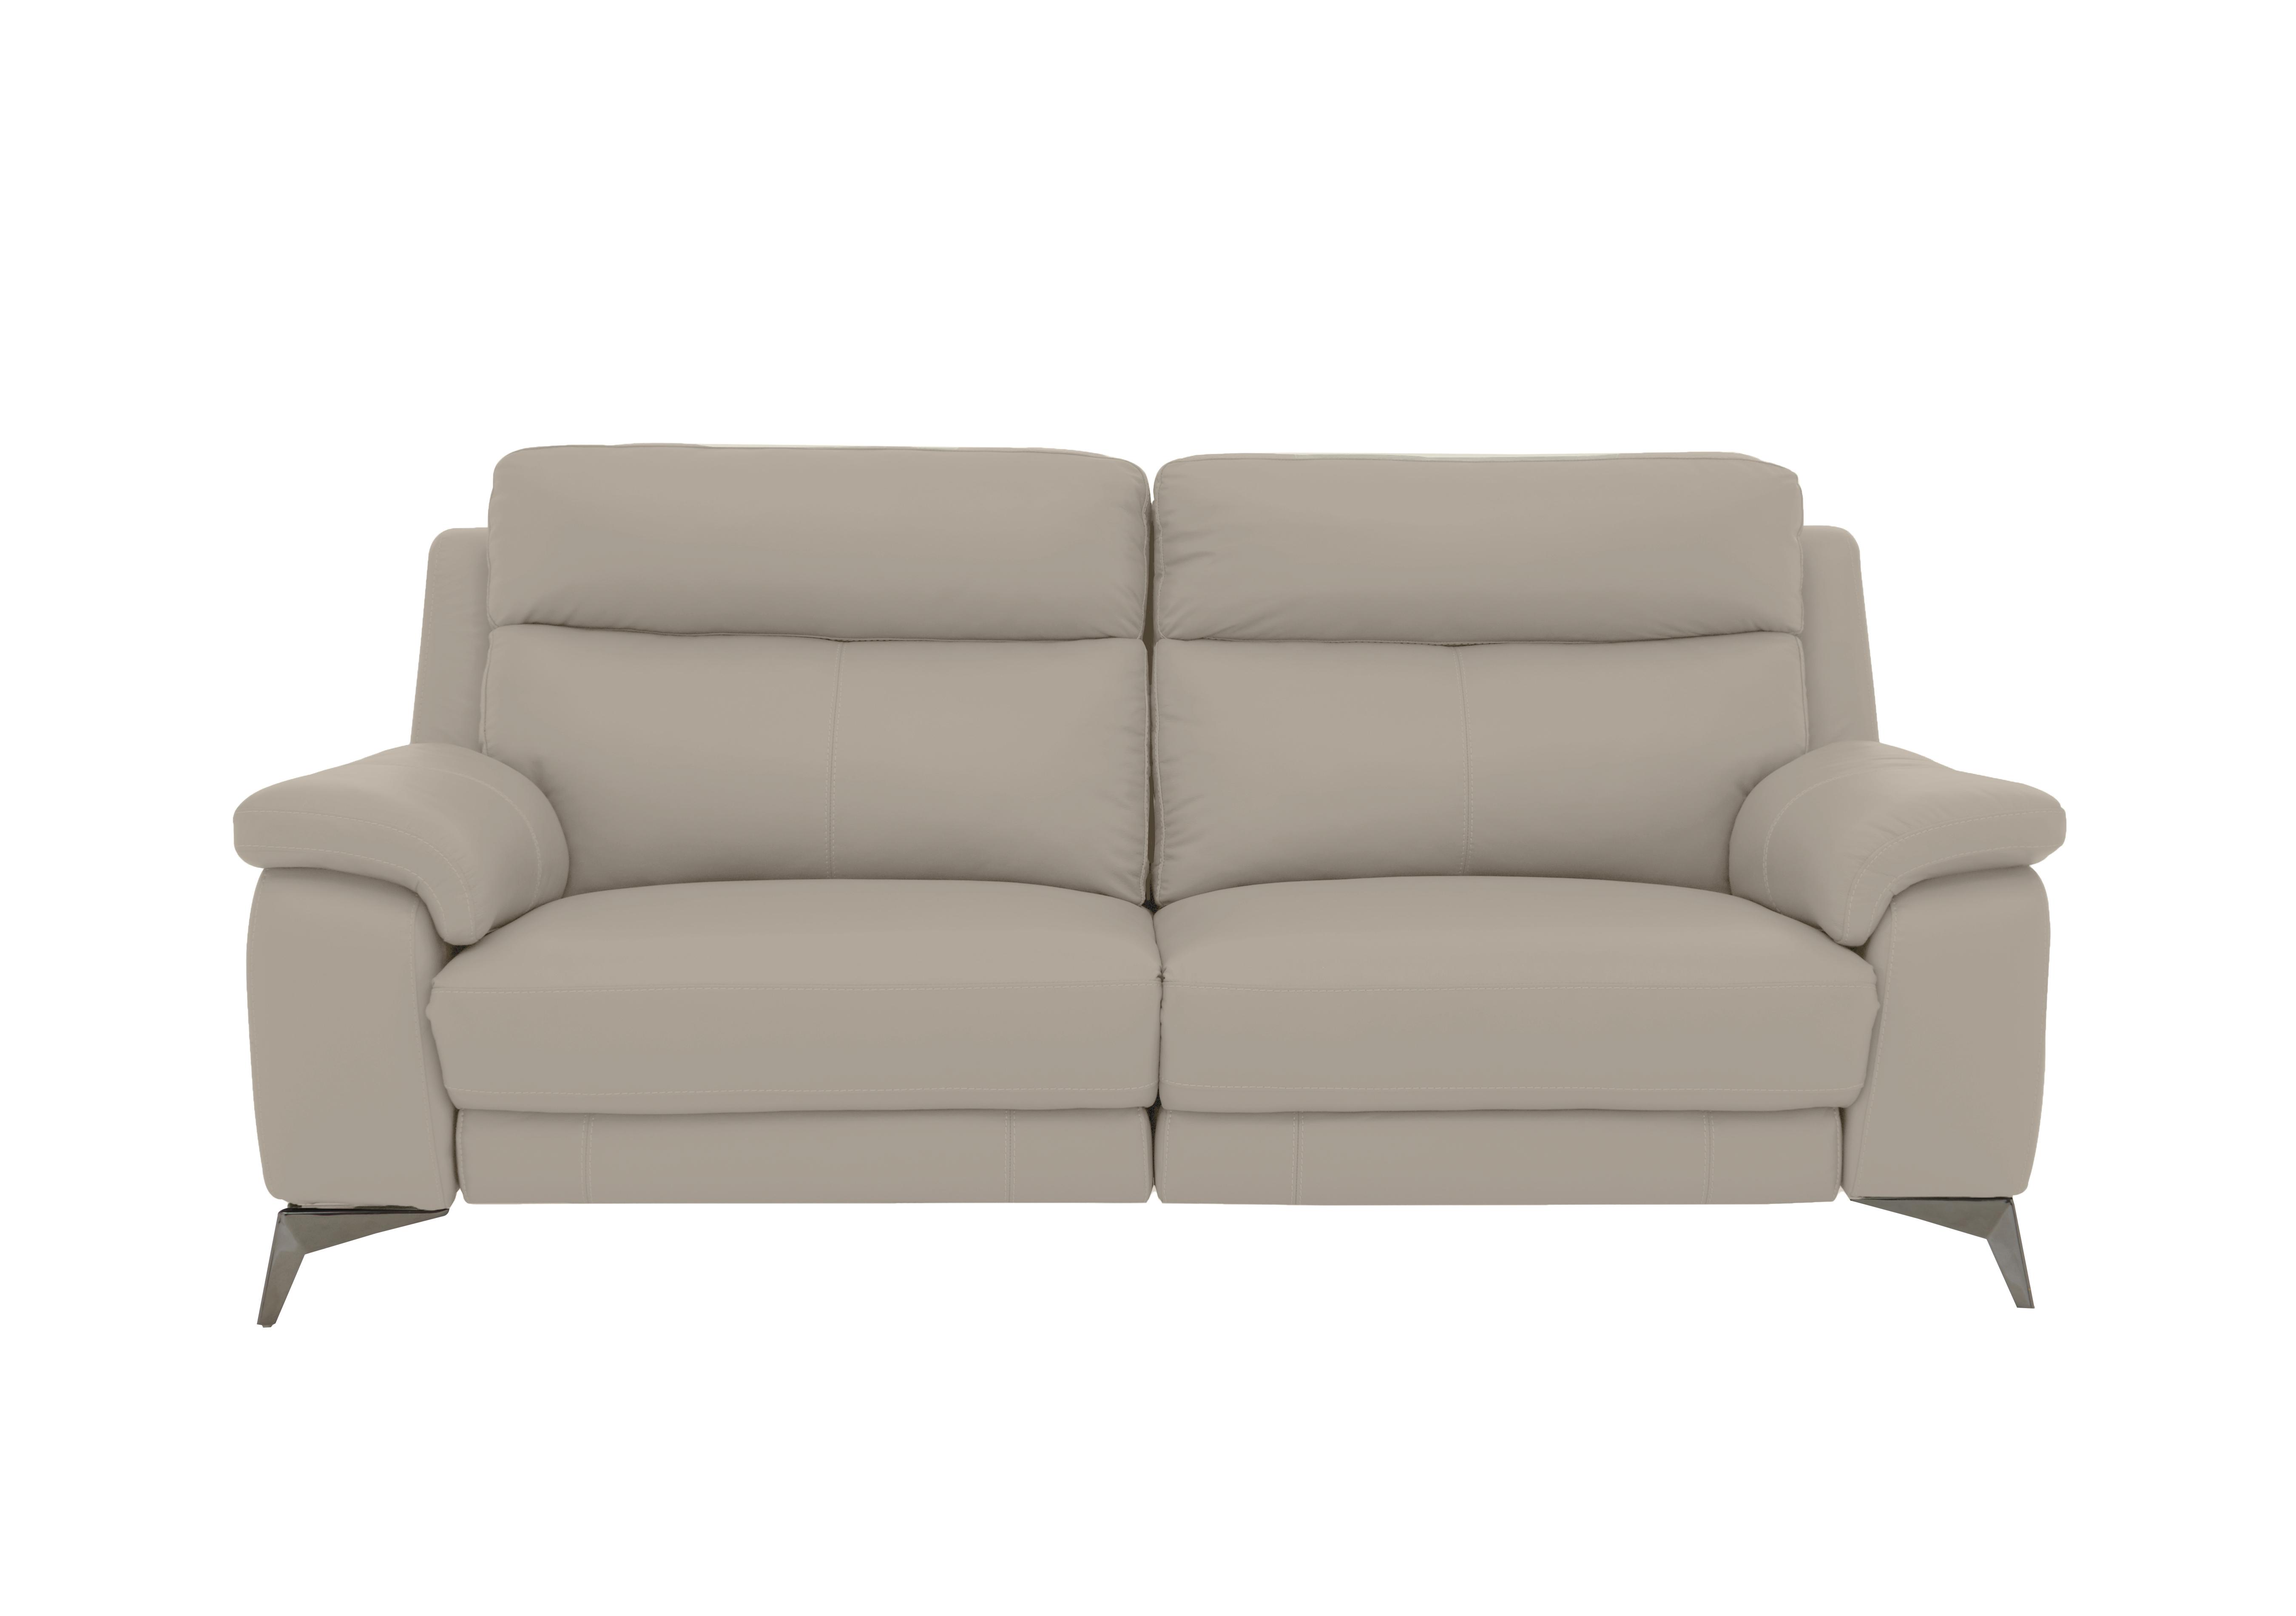 Missouri 3 Seater Leather Sofa in Bv-946b Silver Grey on Furniture Village